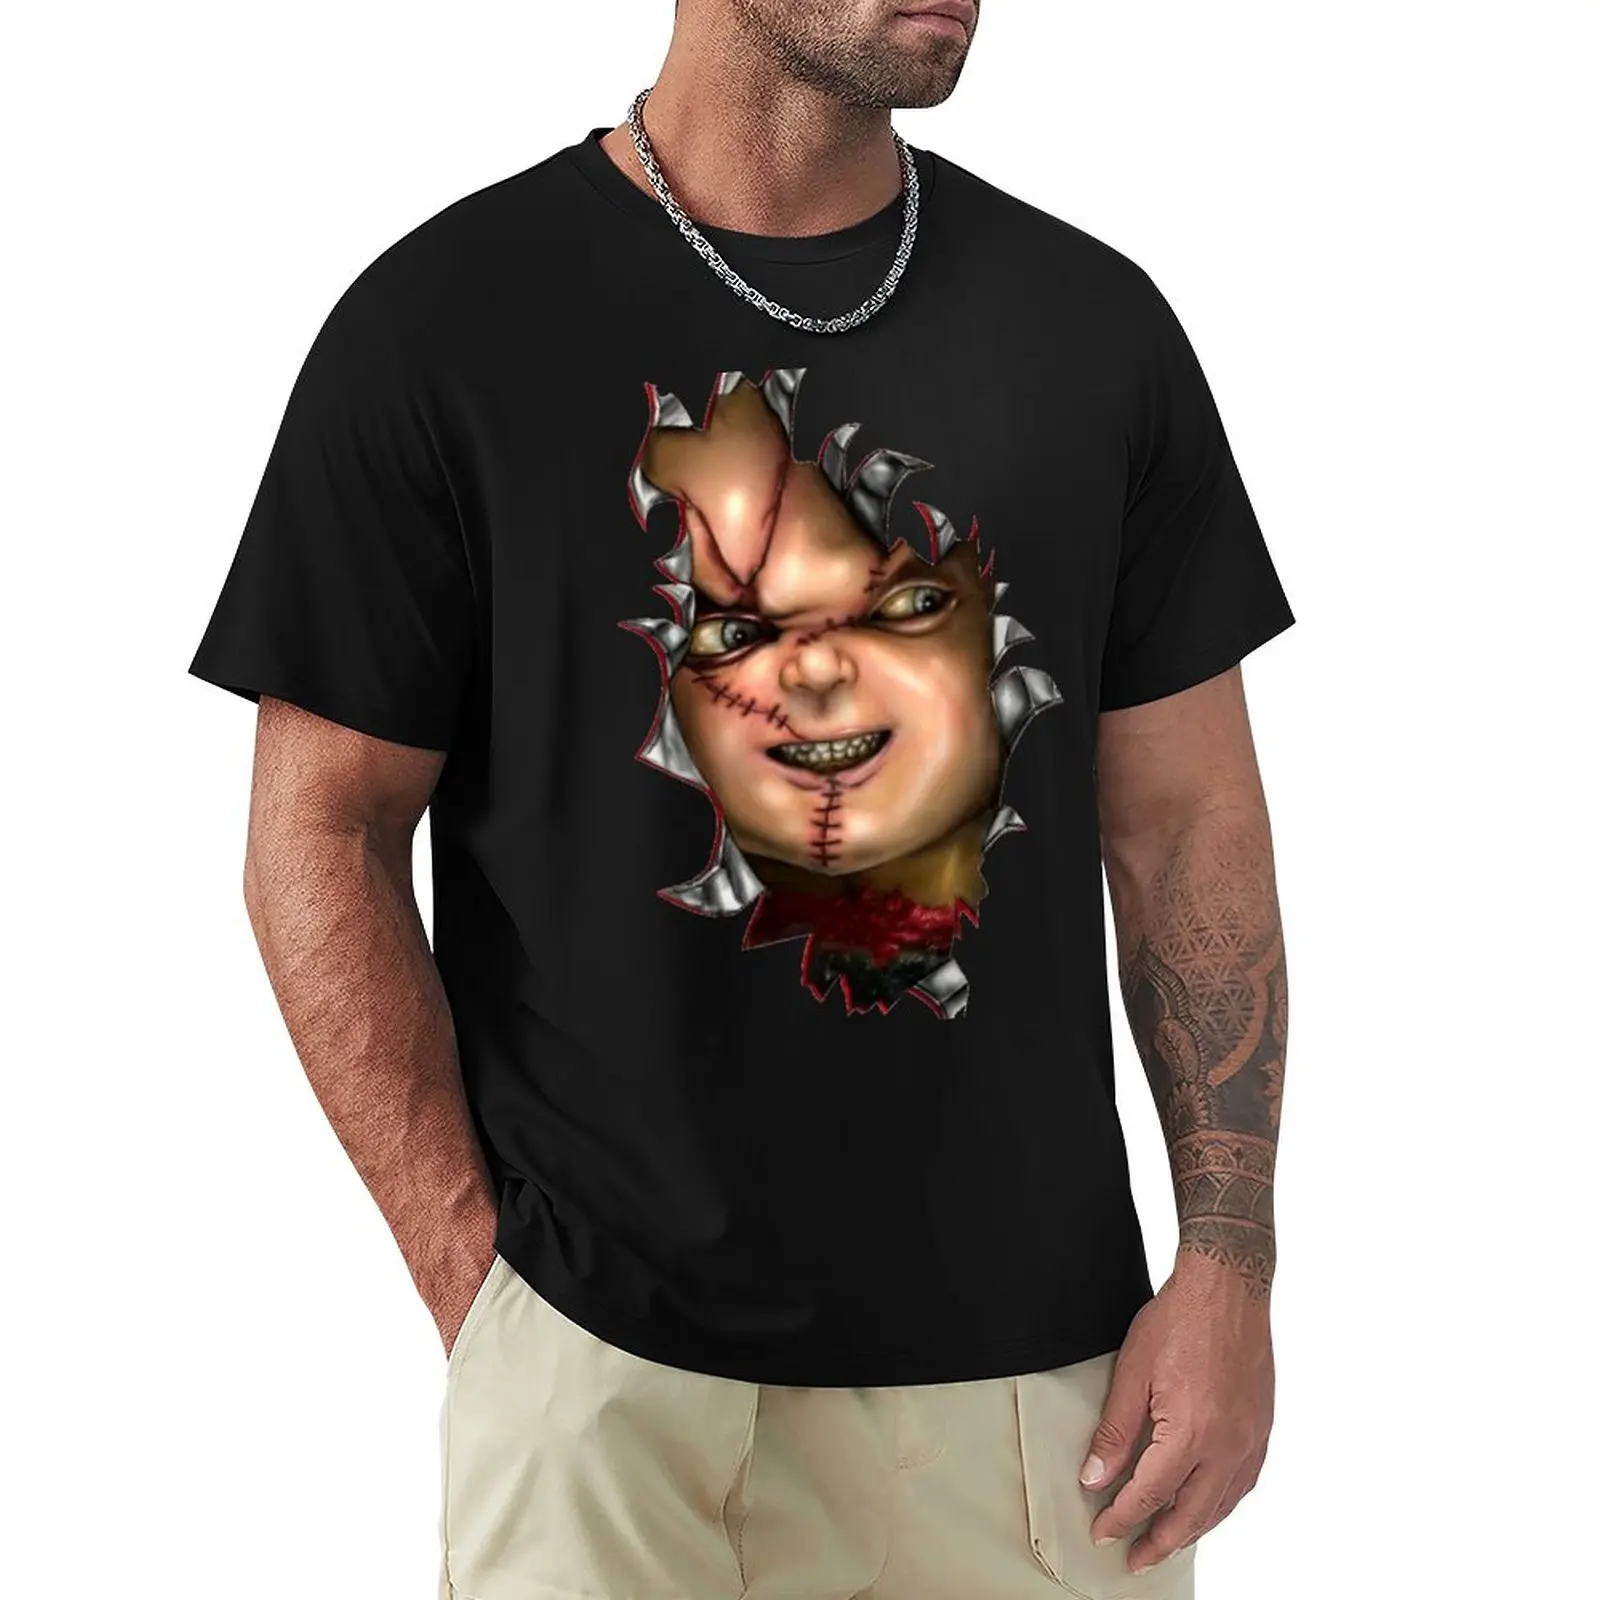 

Chucky Hot sfregiato T-Shirt hippie clothes shirts graphic tees mens t shirts casual stylish